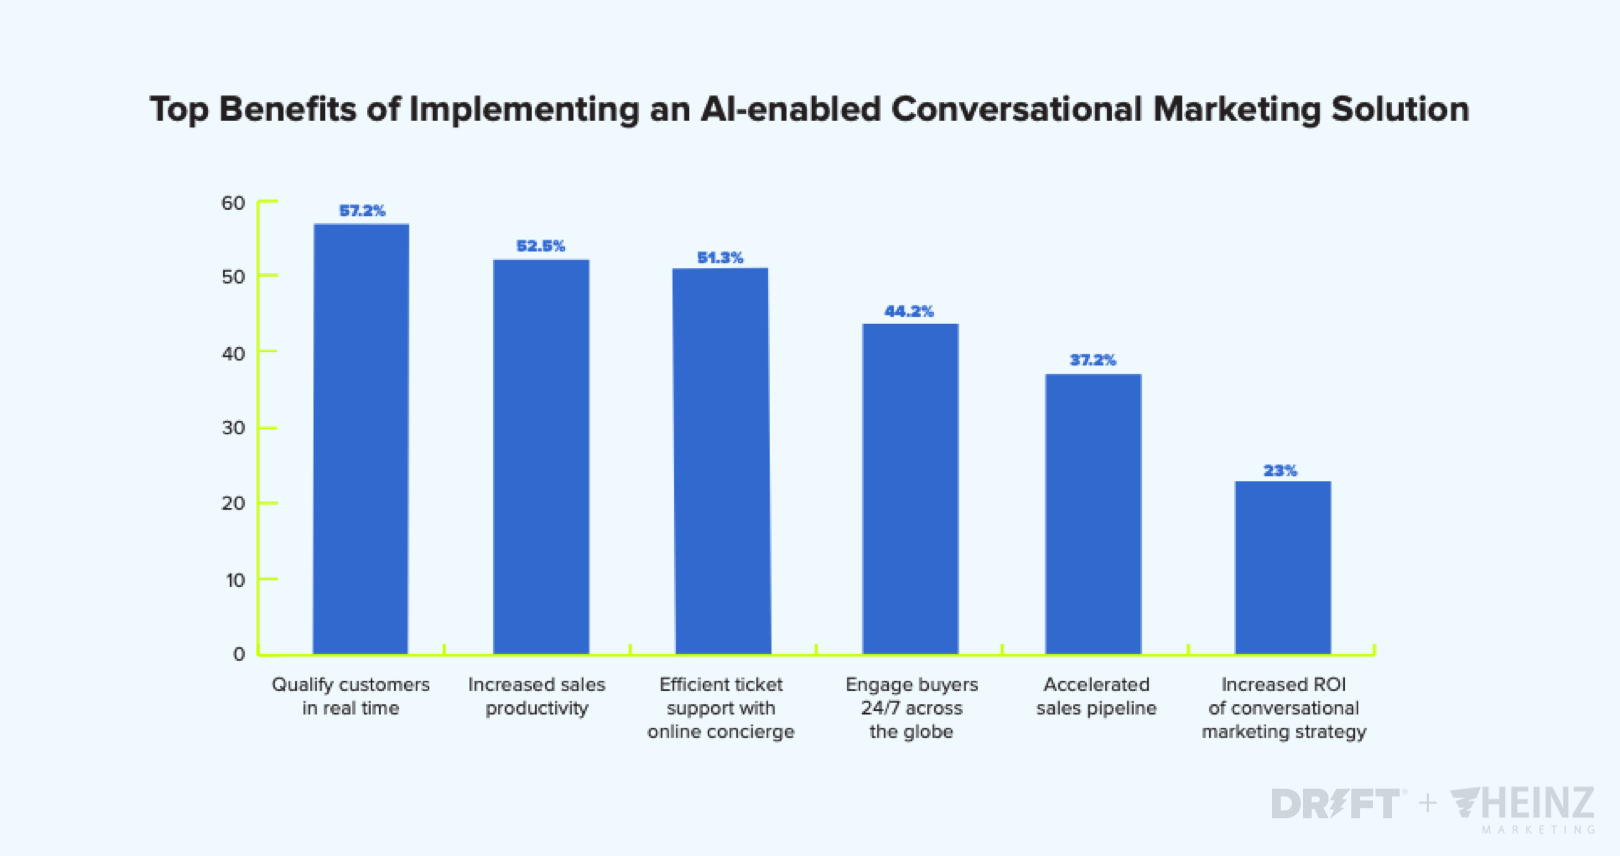 AI-enabled Conversational Marketing benefits